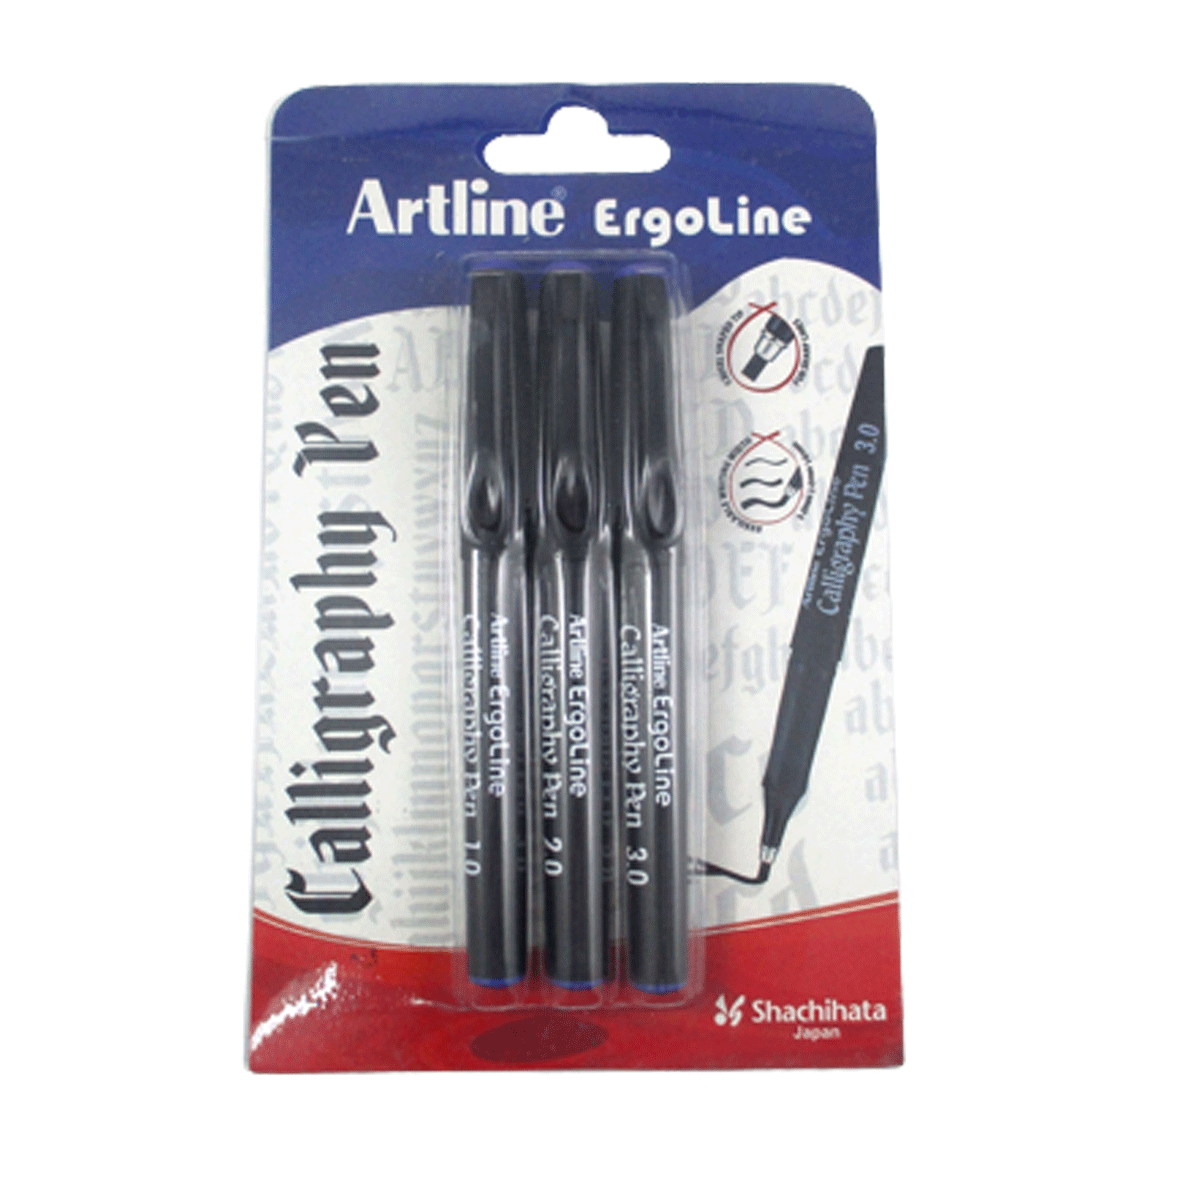 Artline Calligraphy Pen 3 nos Blue Color - 1.0 2.0 3.0 tips Model No: 18052